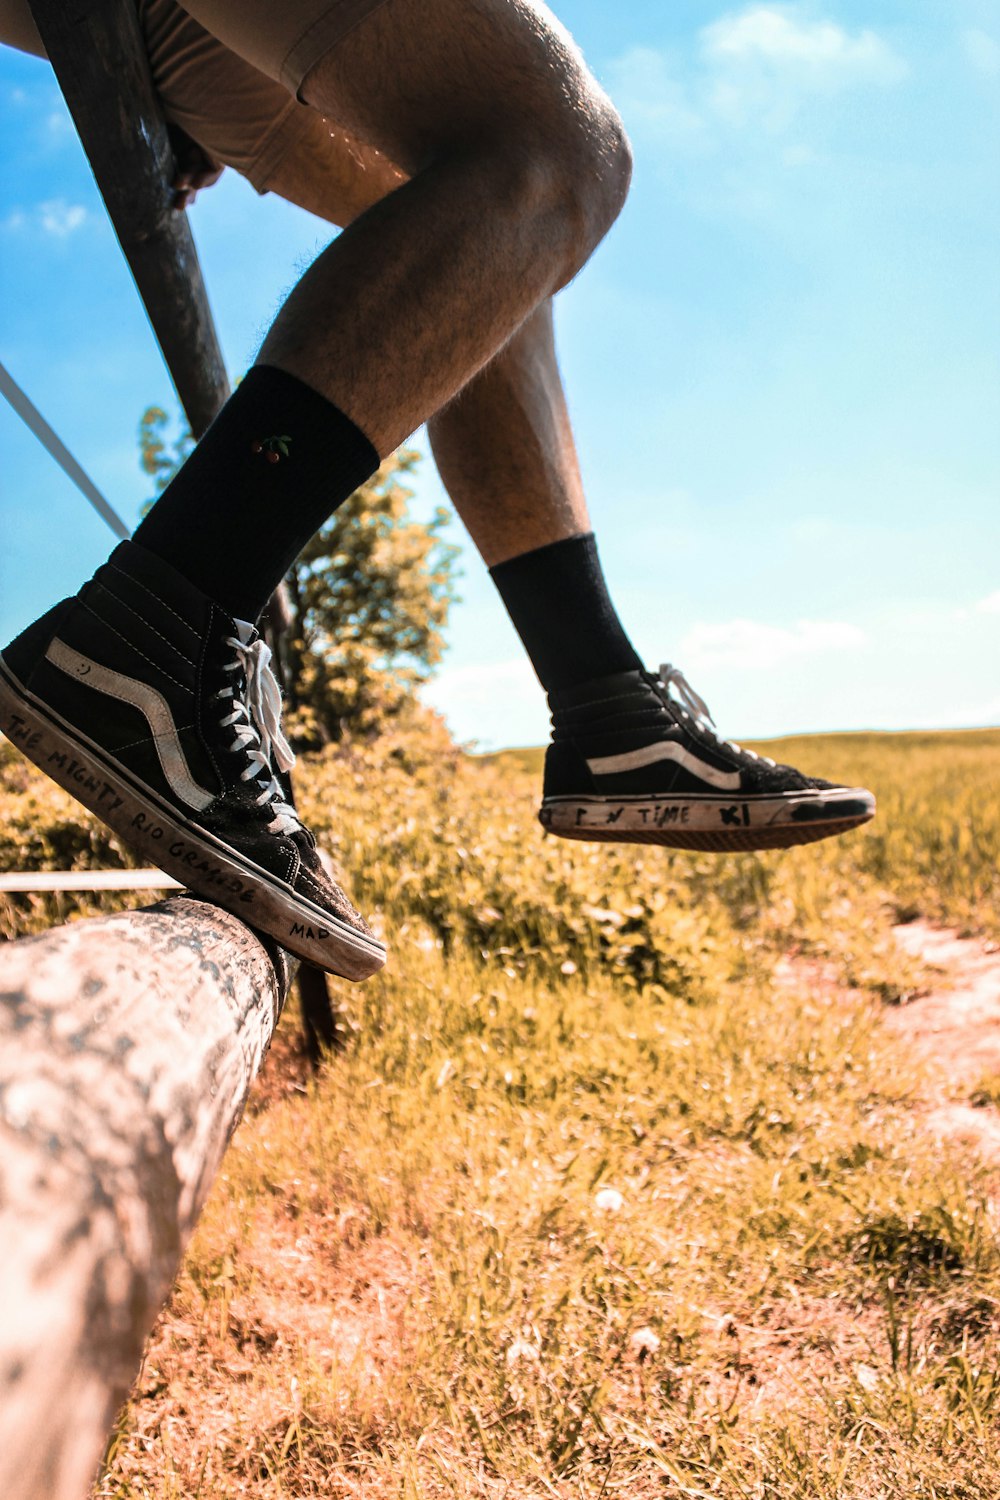 Tegne forsikring hård pop person wearing black socks and black-and-white Vans shoes sitting on black  rod photo – Free Clothing Image on Unsplash